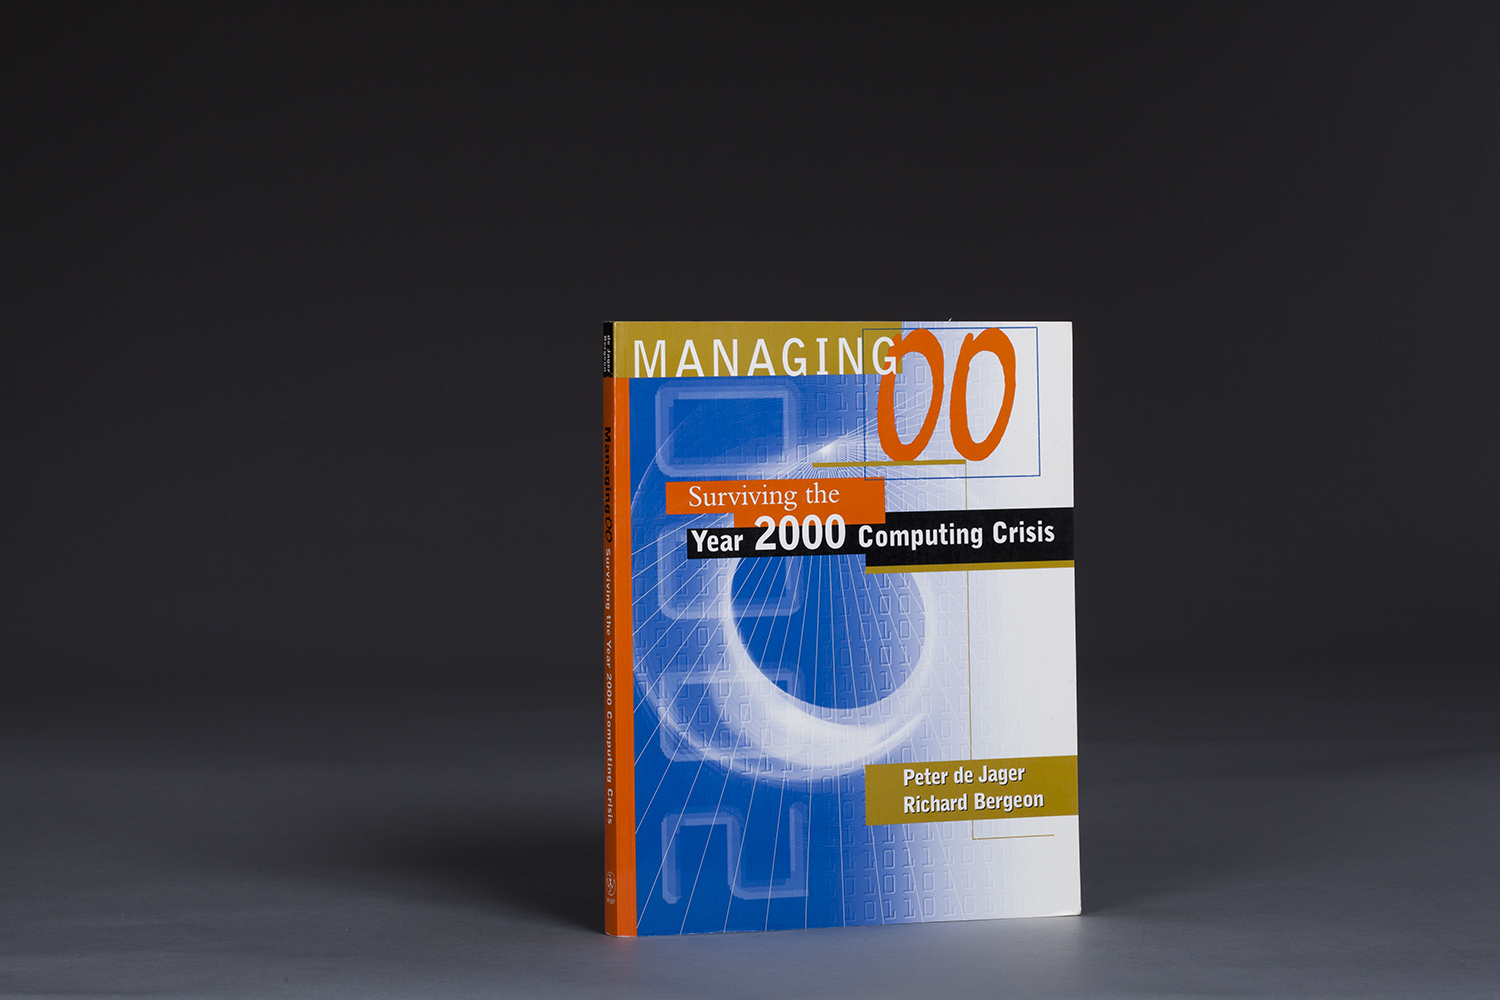 Managing 00 - Surviving the Year 2000 Computing Crisis - 0614 Cover.jpg